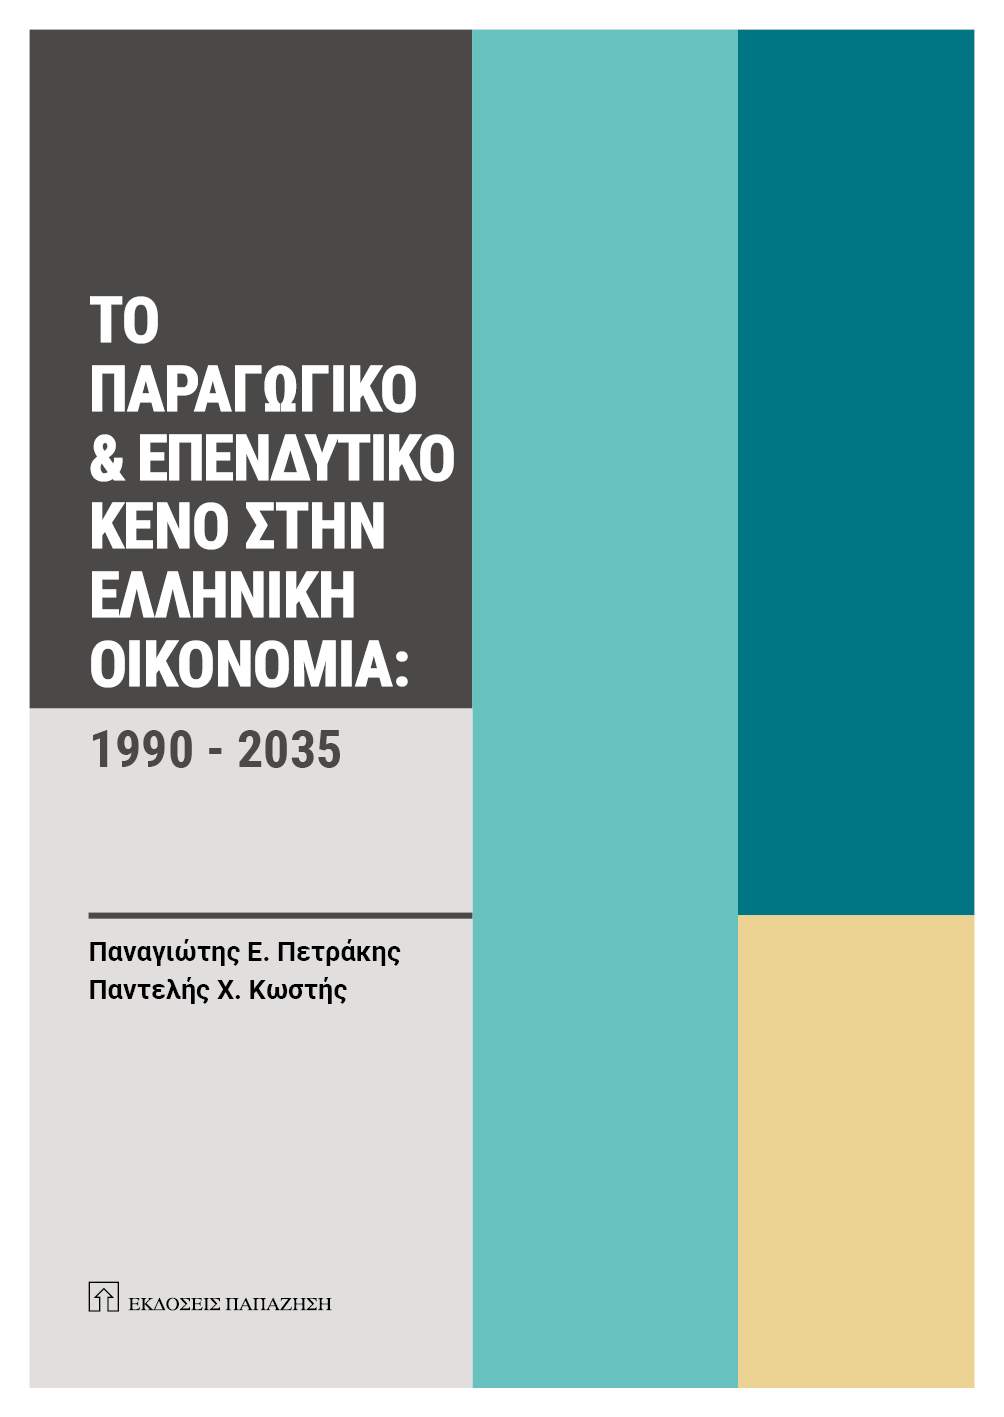 To νέο βιβλίο των Πετράκη – Κωστή: «Το Παραγωγικό & Επενδυτικό Κενό στην Ελληνική Οικονομία: 1990-2035»